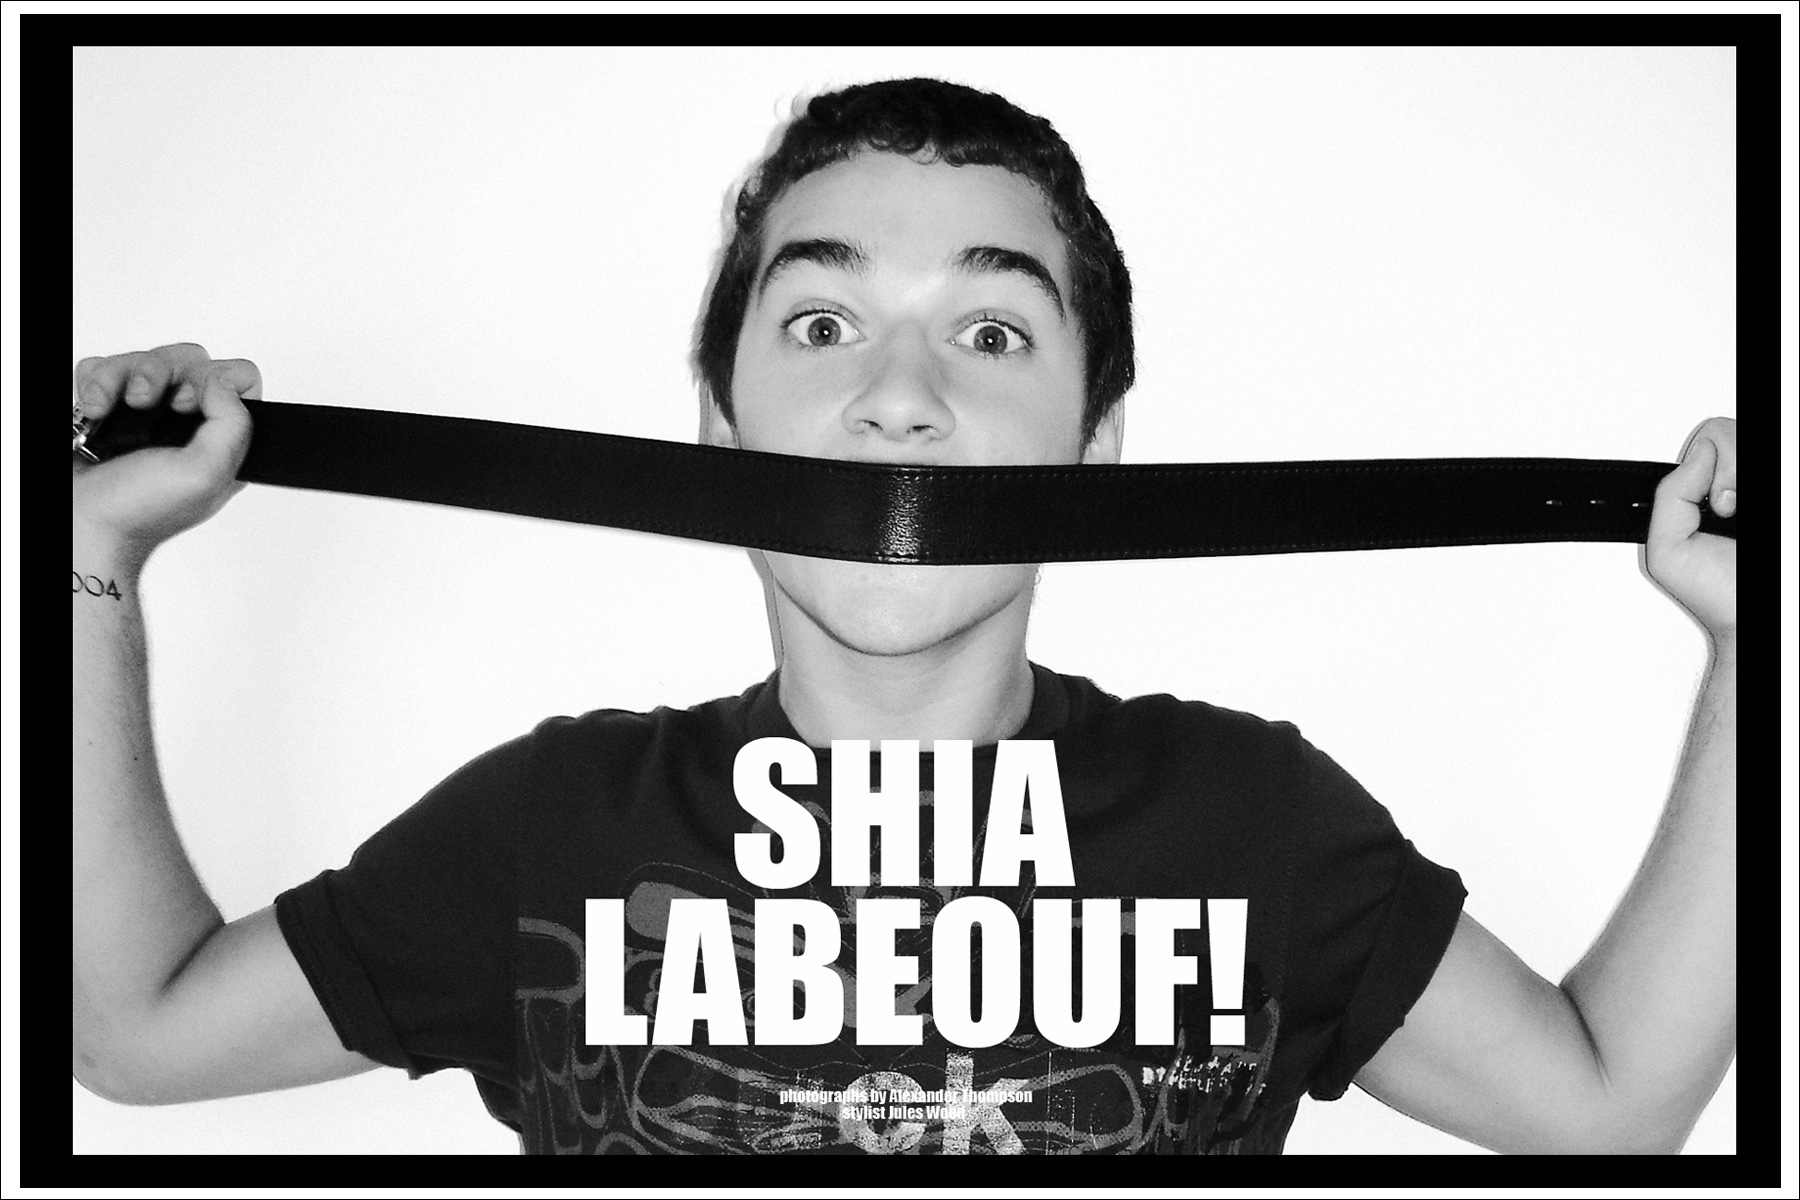 Shia Labeouf